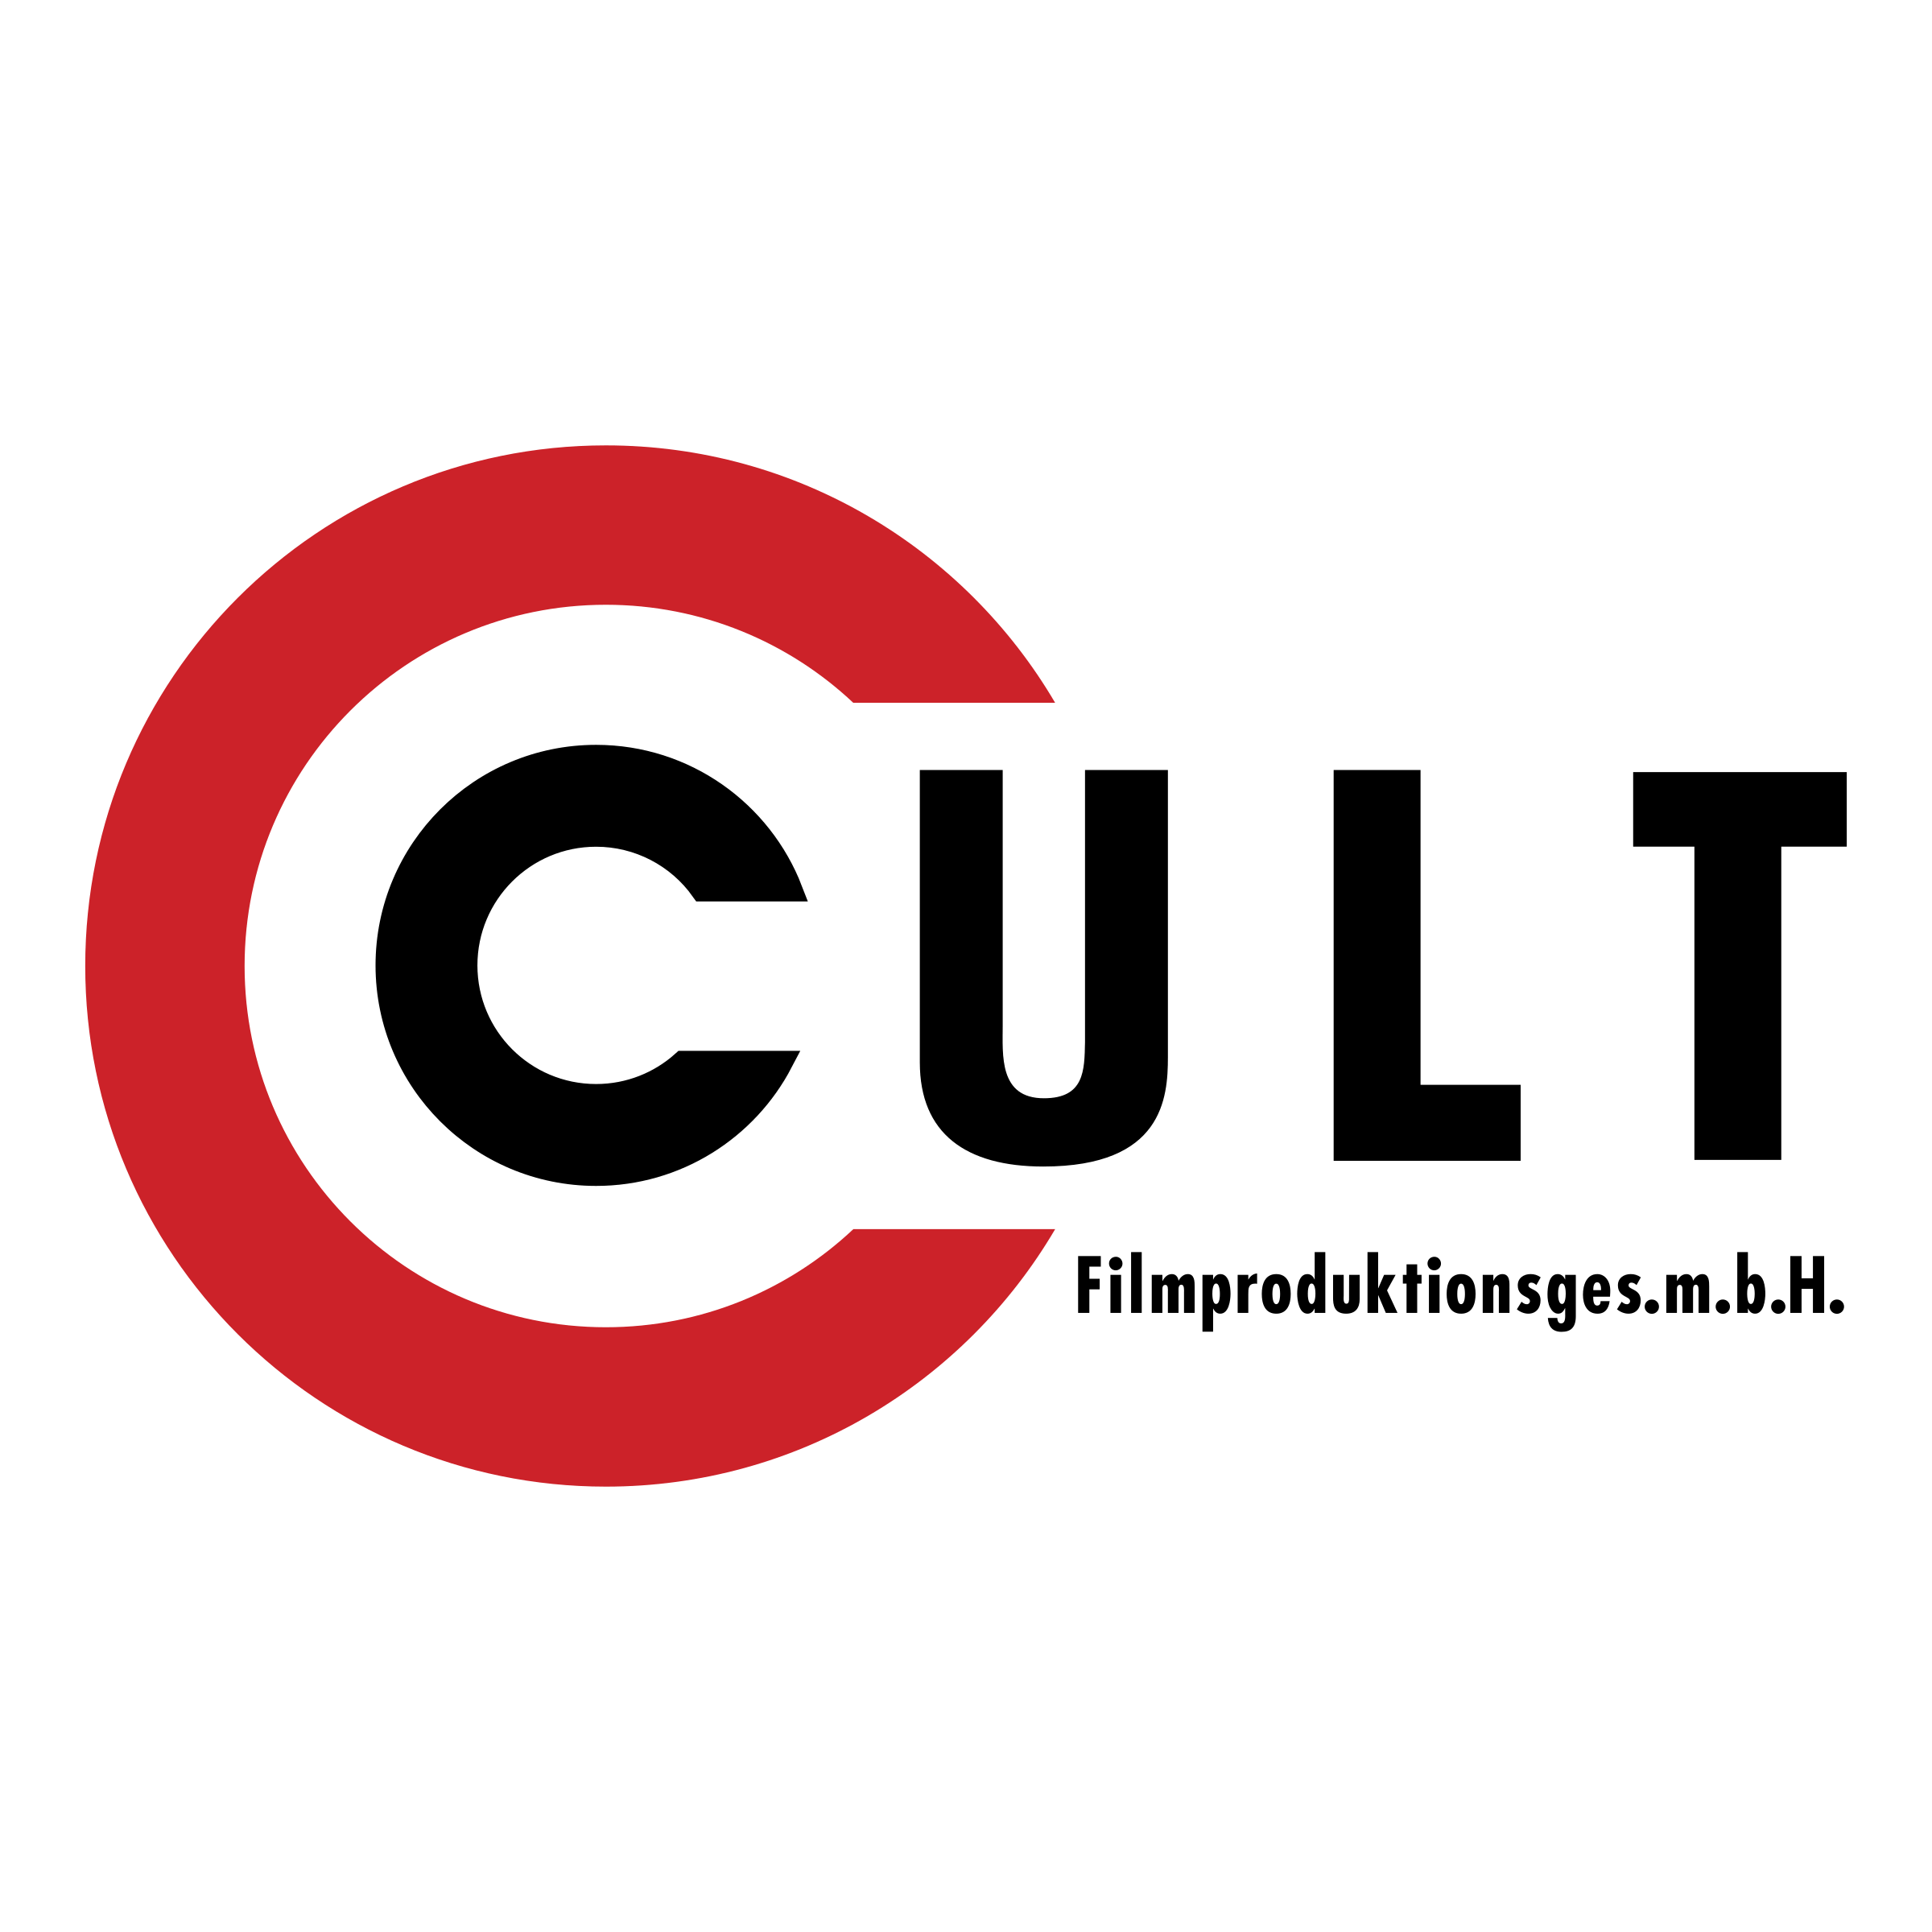 Cult Logo - Cult Logo PNG Transparent & SVG Vector - Freebie Supply